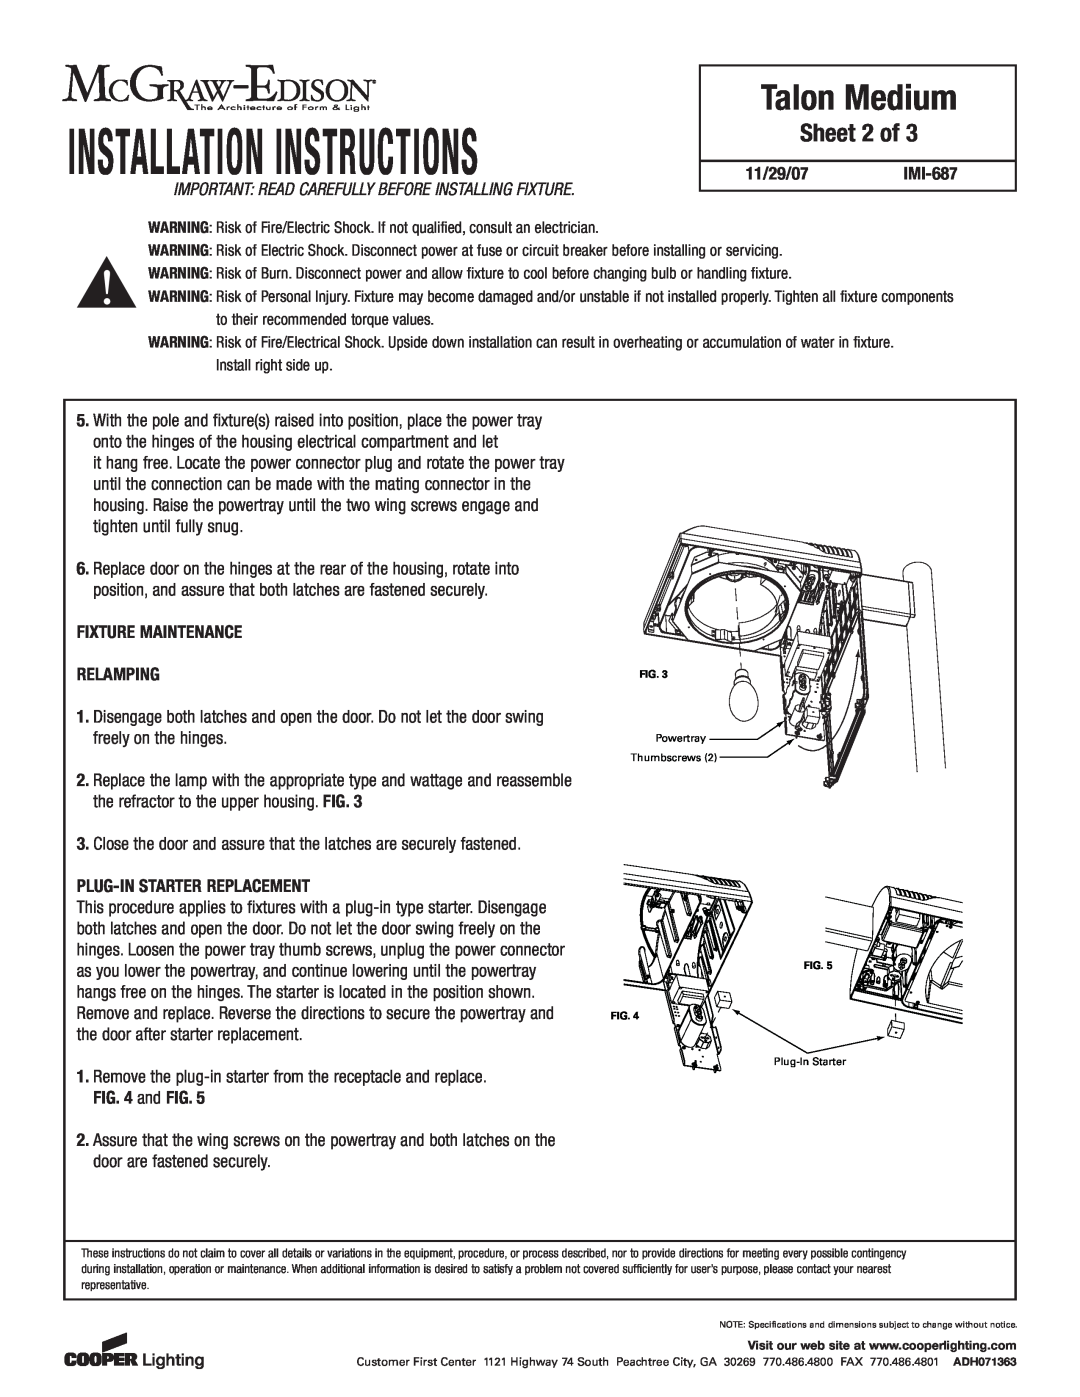 Cooper Lighting IMI-687 installation instructions Sheet 2 of, Installation Instructions, Talon Medium 